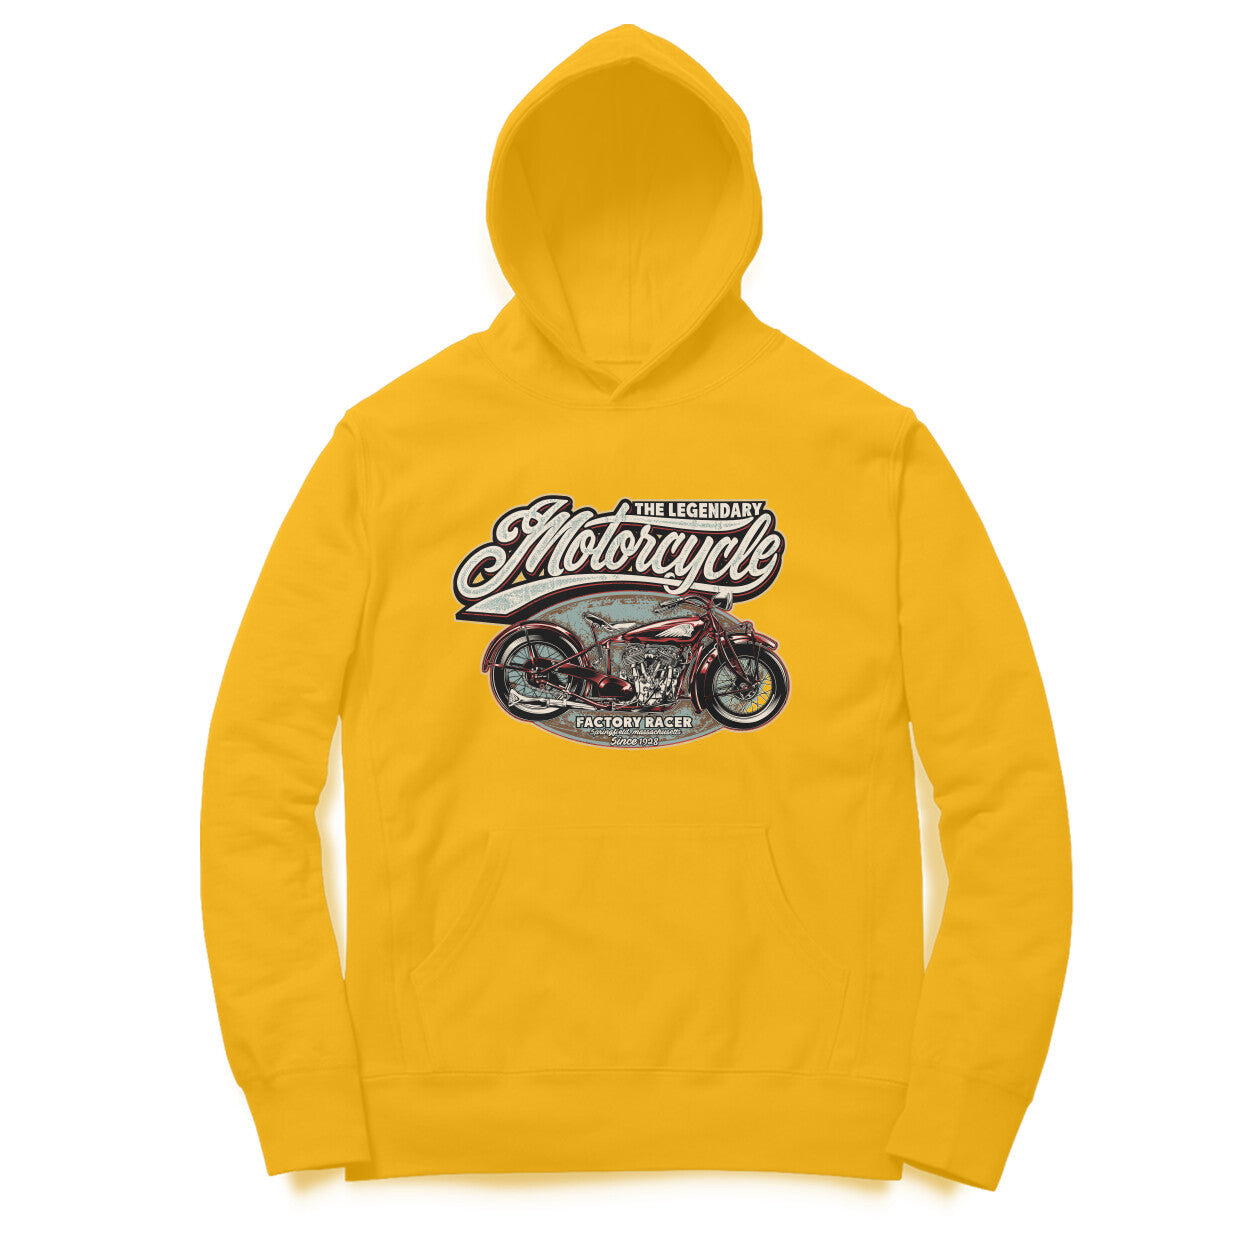 "The Legendary Motorcycle" Vintage Motorcycle enthusiast Hoodie